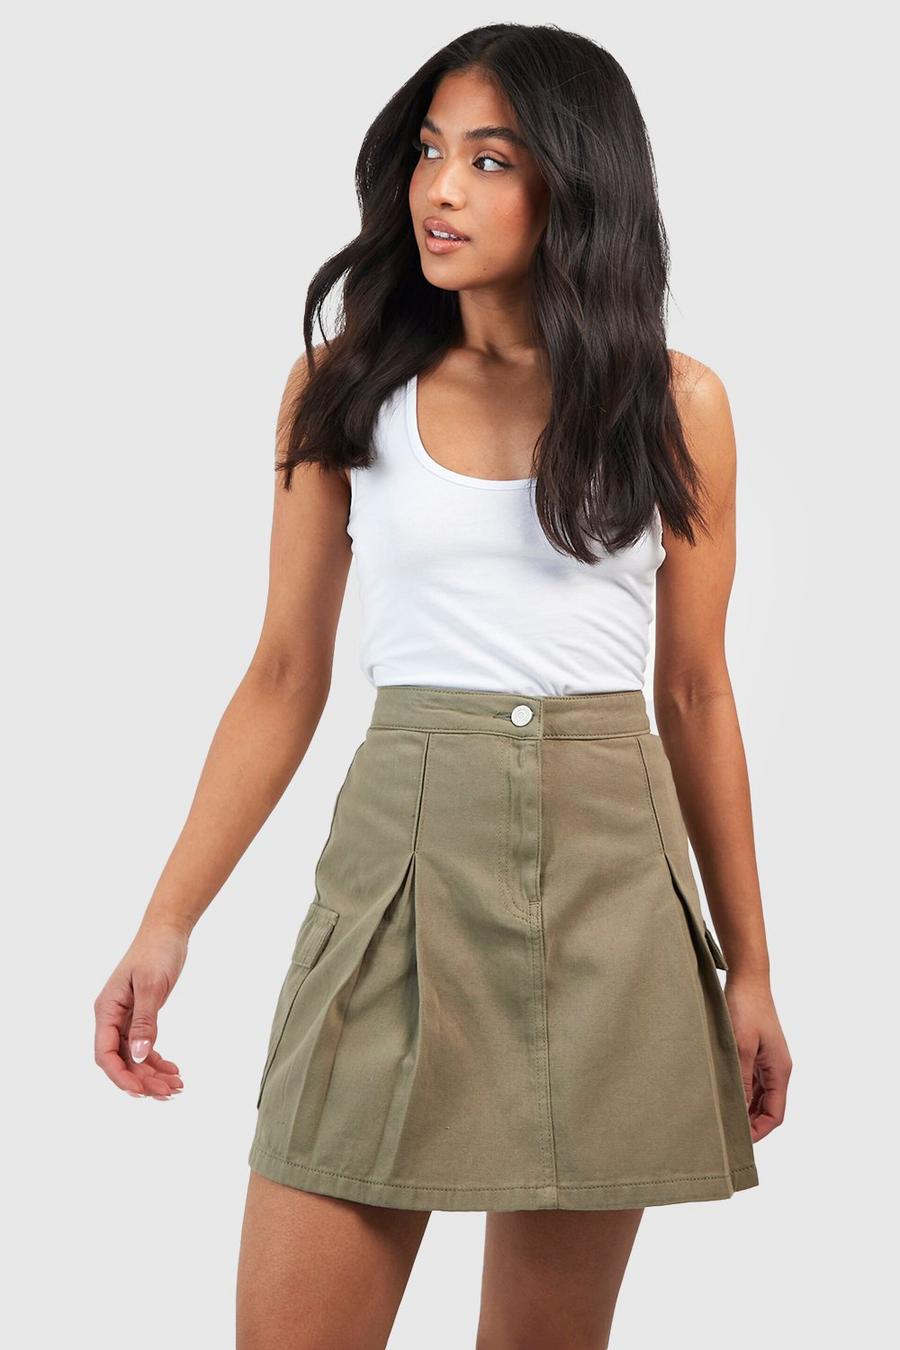 Khaki Green Solid Color Decor Mini Skirt for Sale by Garaga